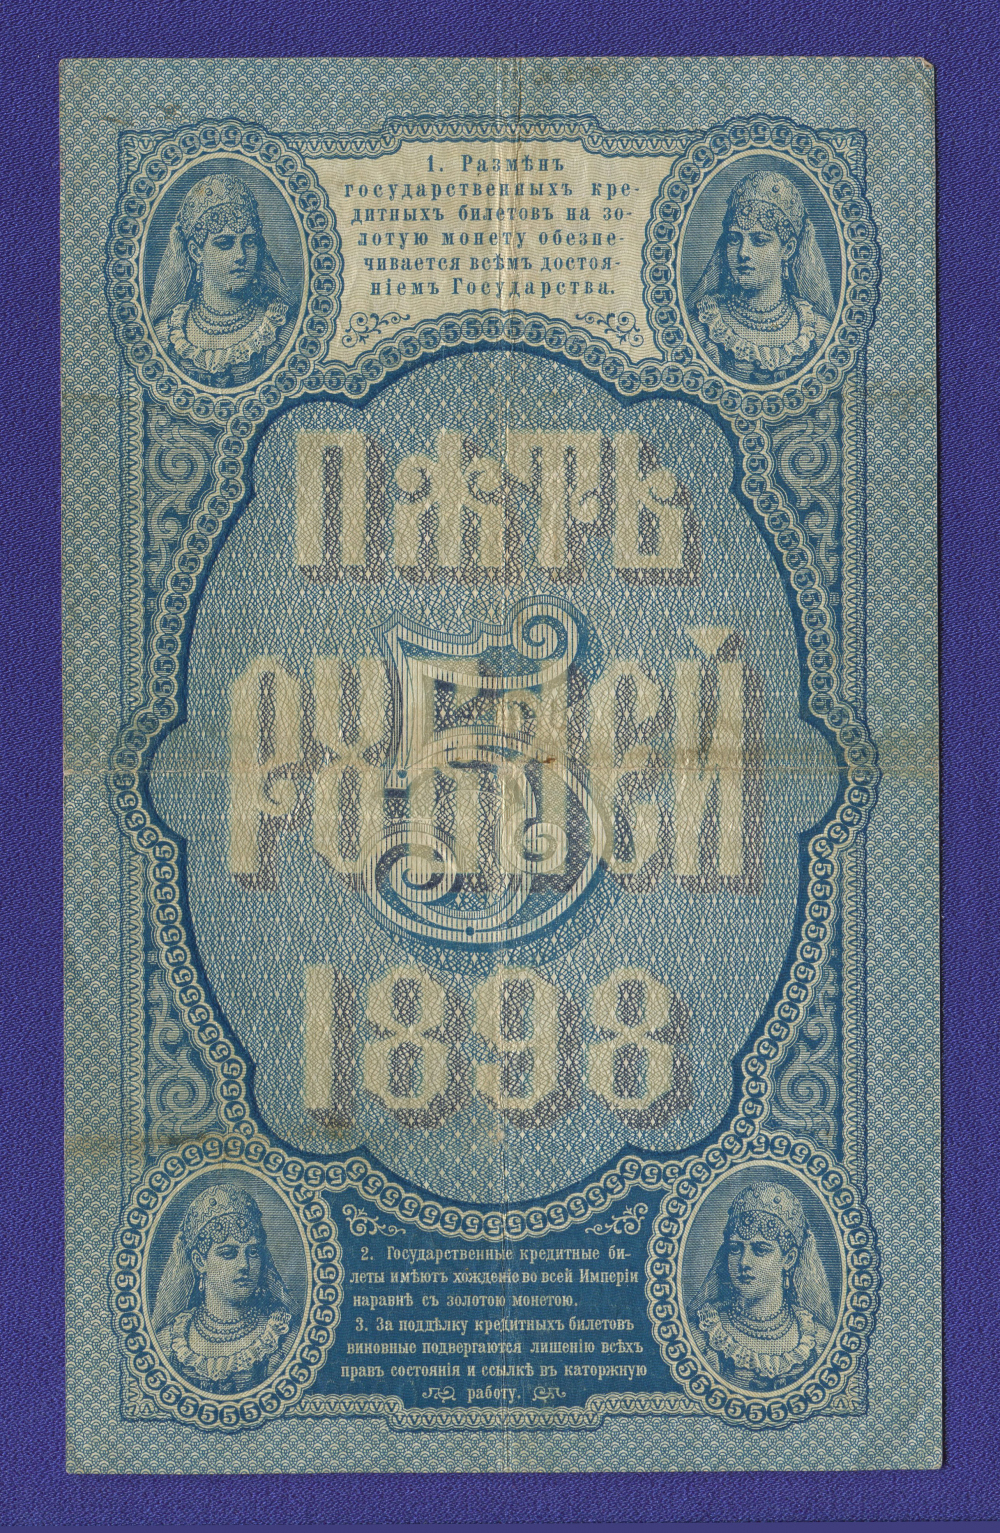 Николай II 5 рублей 1898 года / С. И. Тимашев / В. Иванов / Р3 / VF-XF - 1